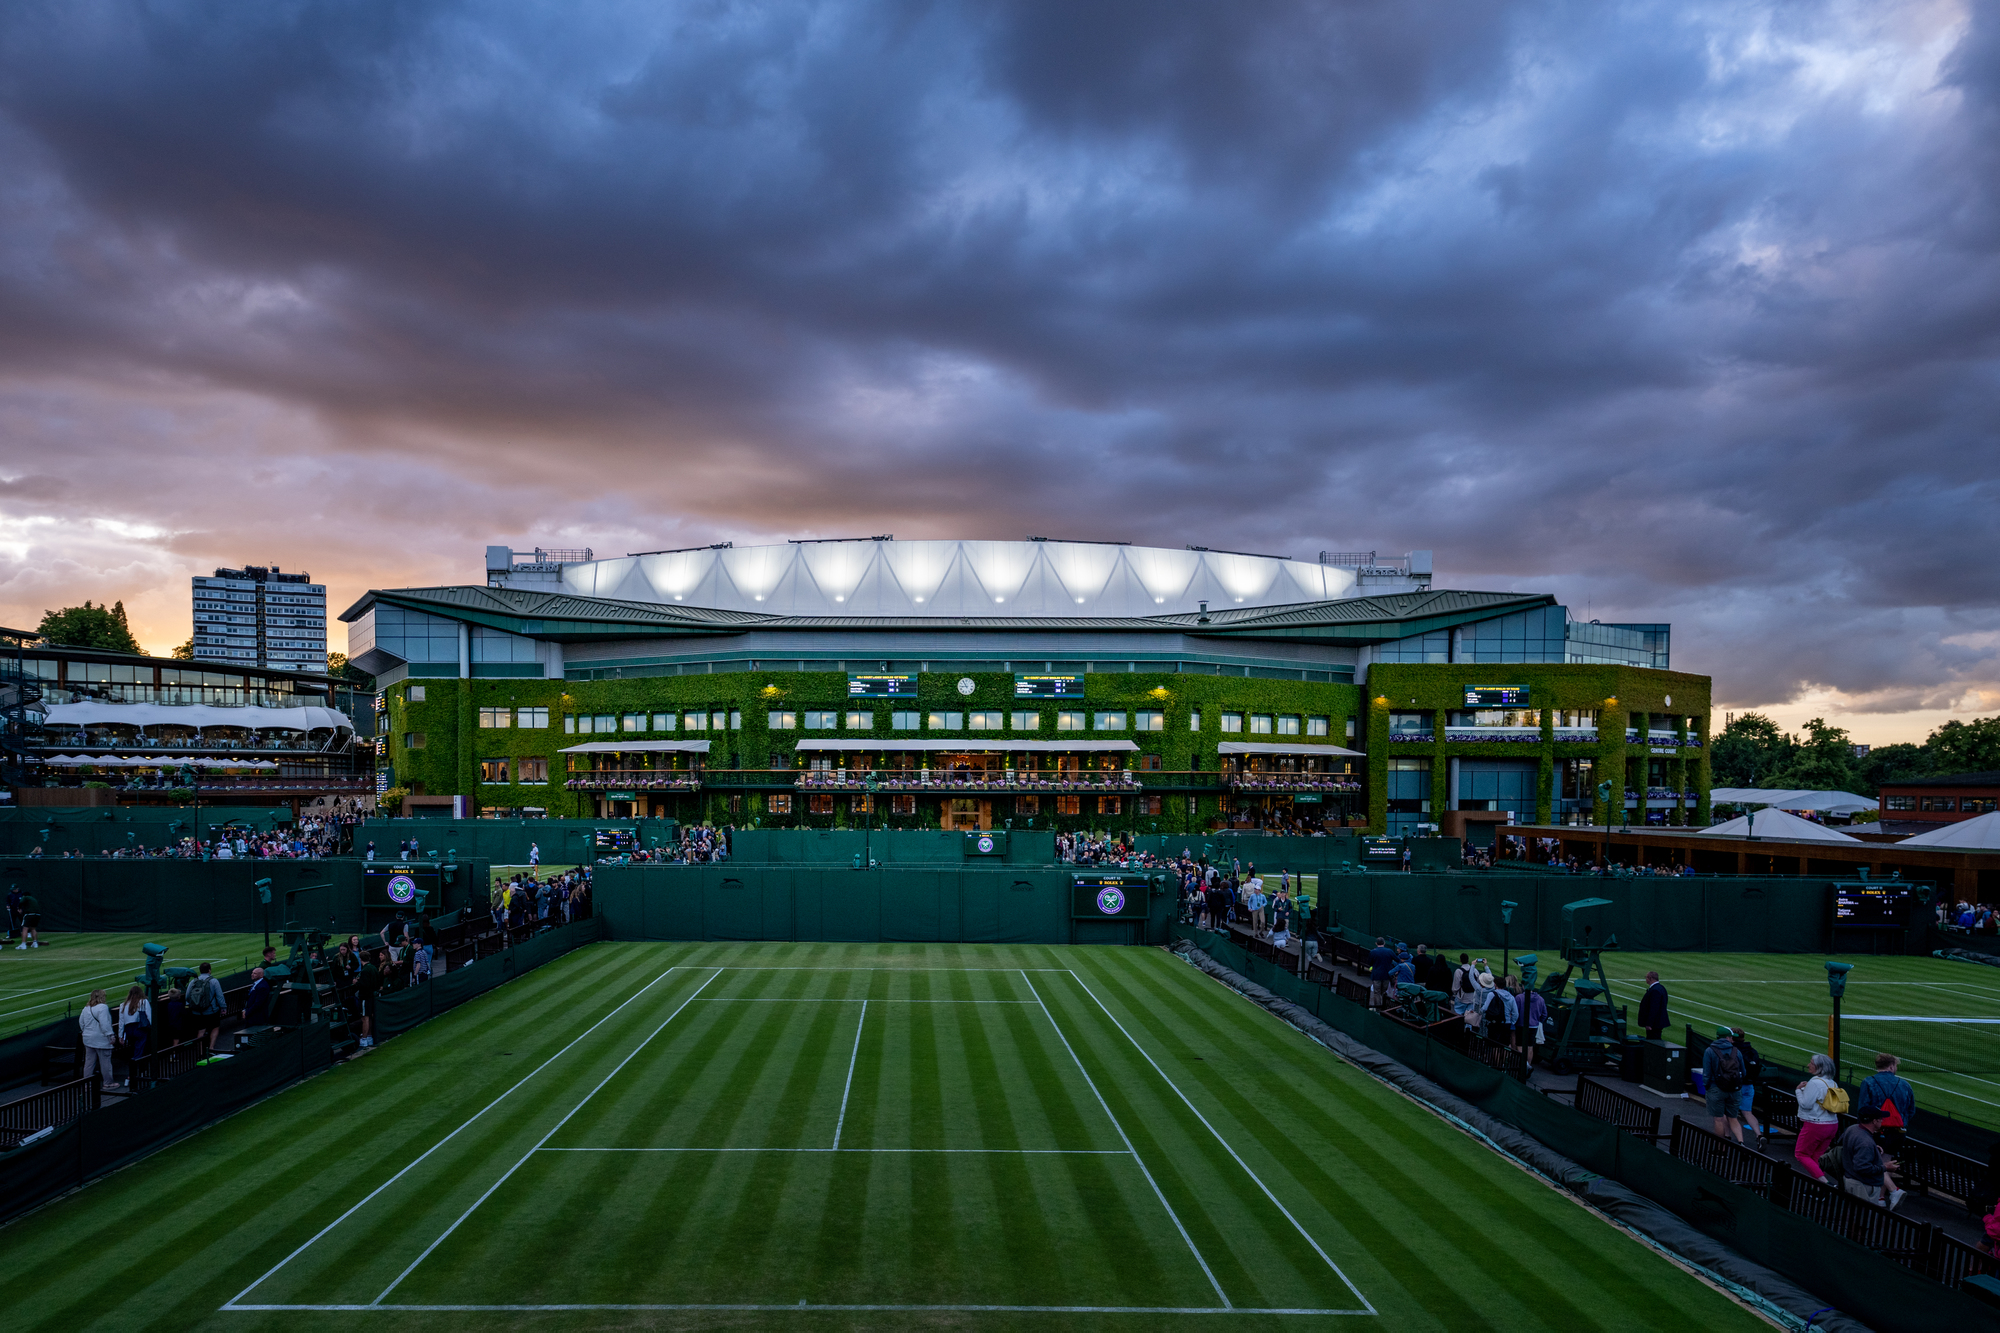 Torneo de Wimbledon 2022. Foto: Wimbledon.